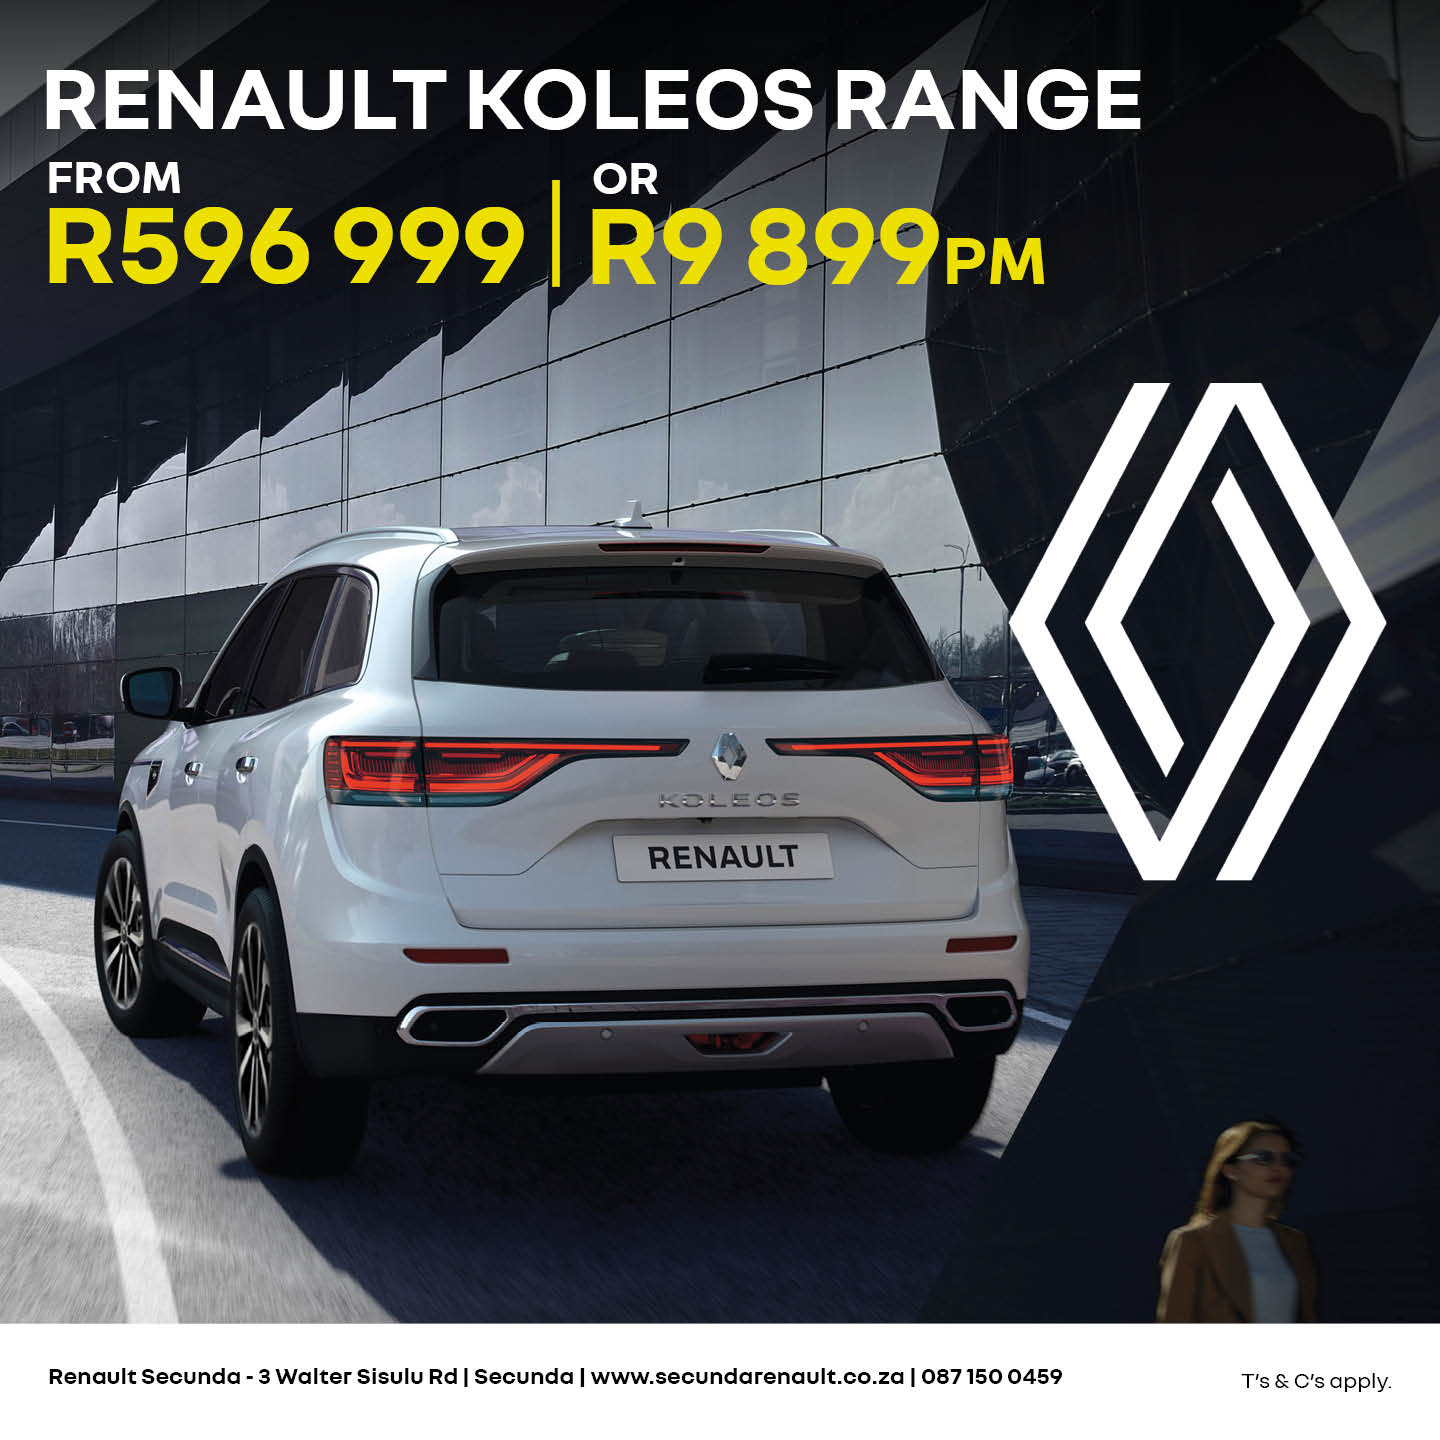 Renault Koleos Range image from Eastvaal Motors